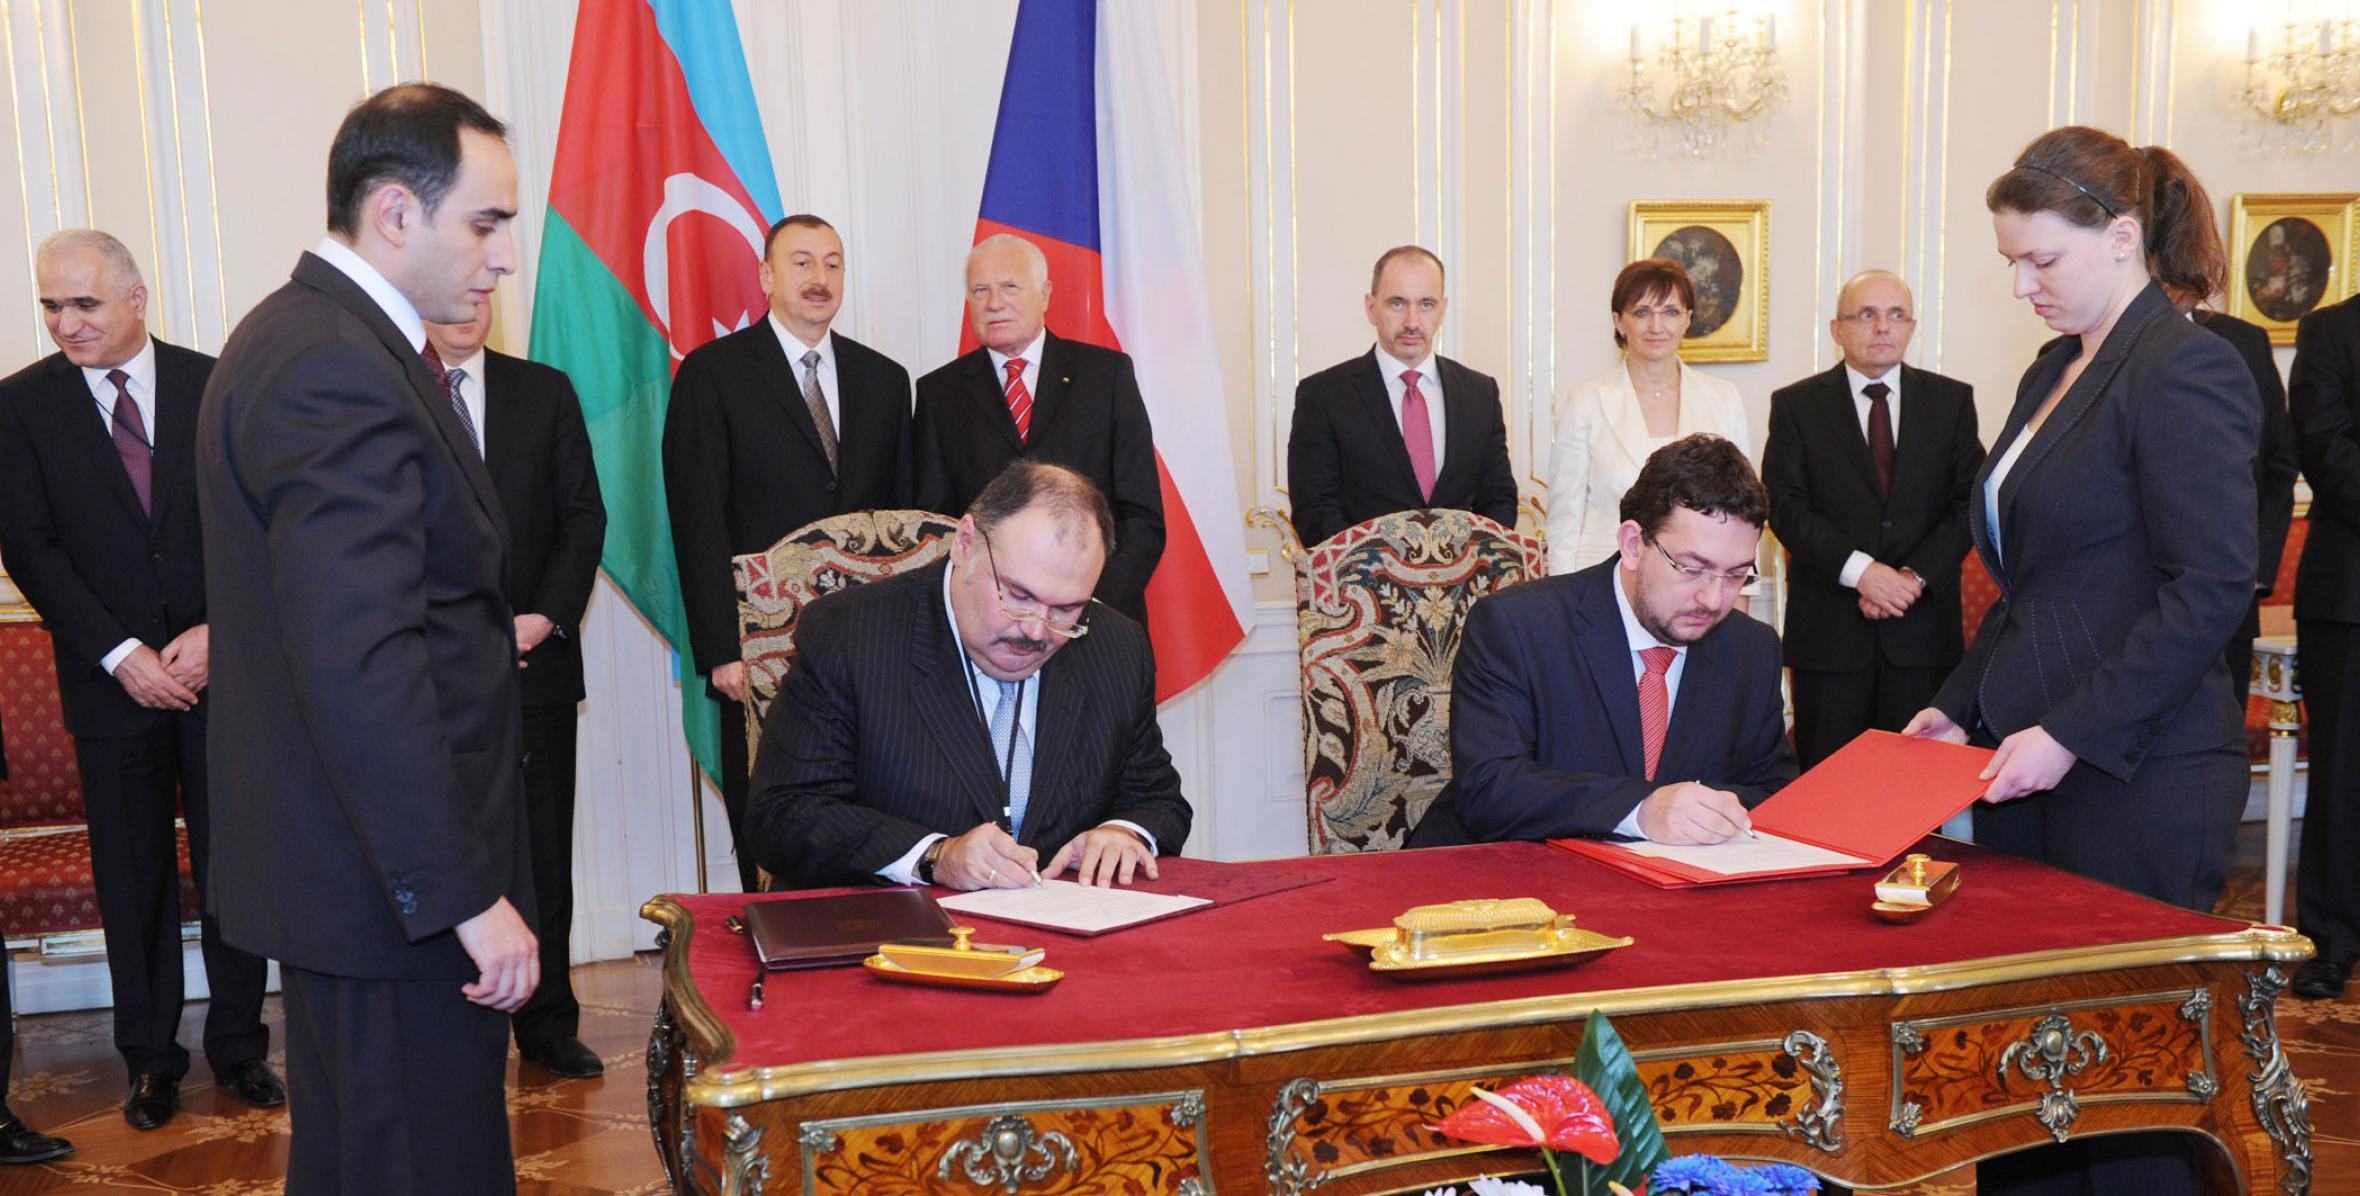 Signing ceremony of Azerbaijani-Czech documents was held